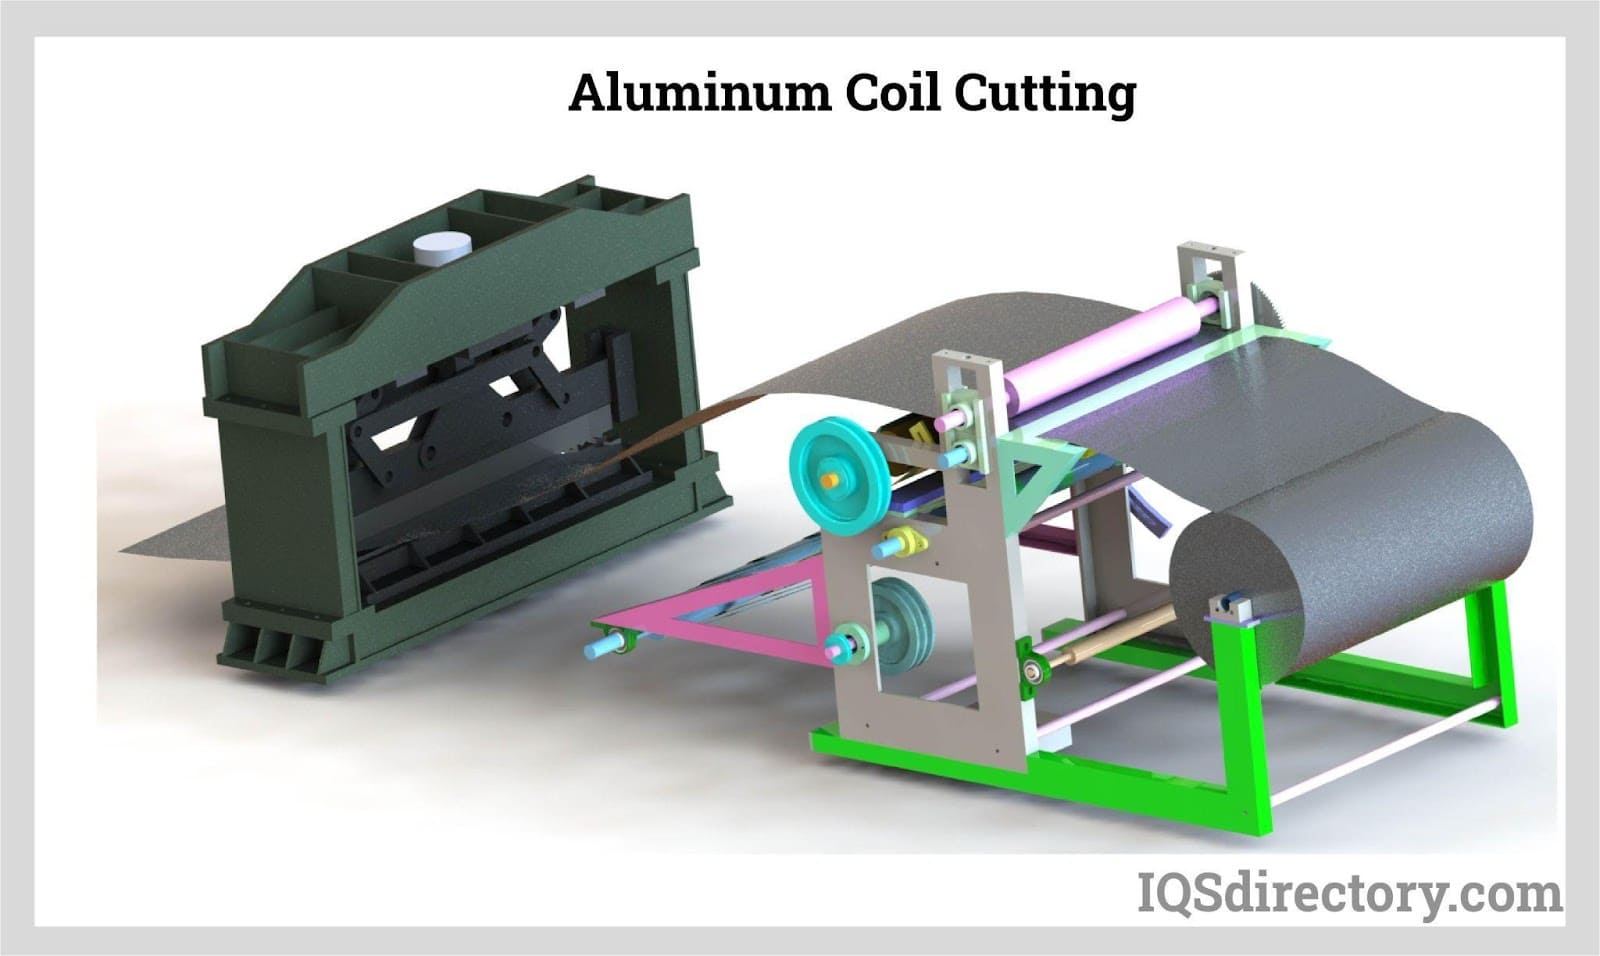 Aluminum Coil Cutting